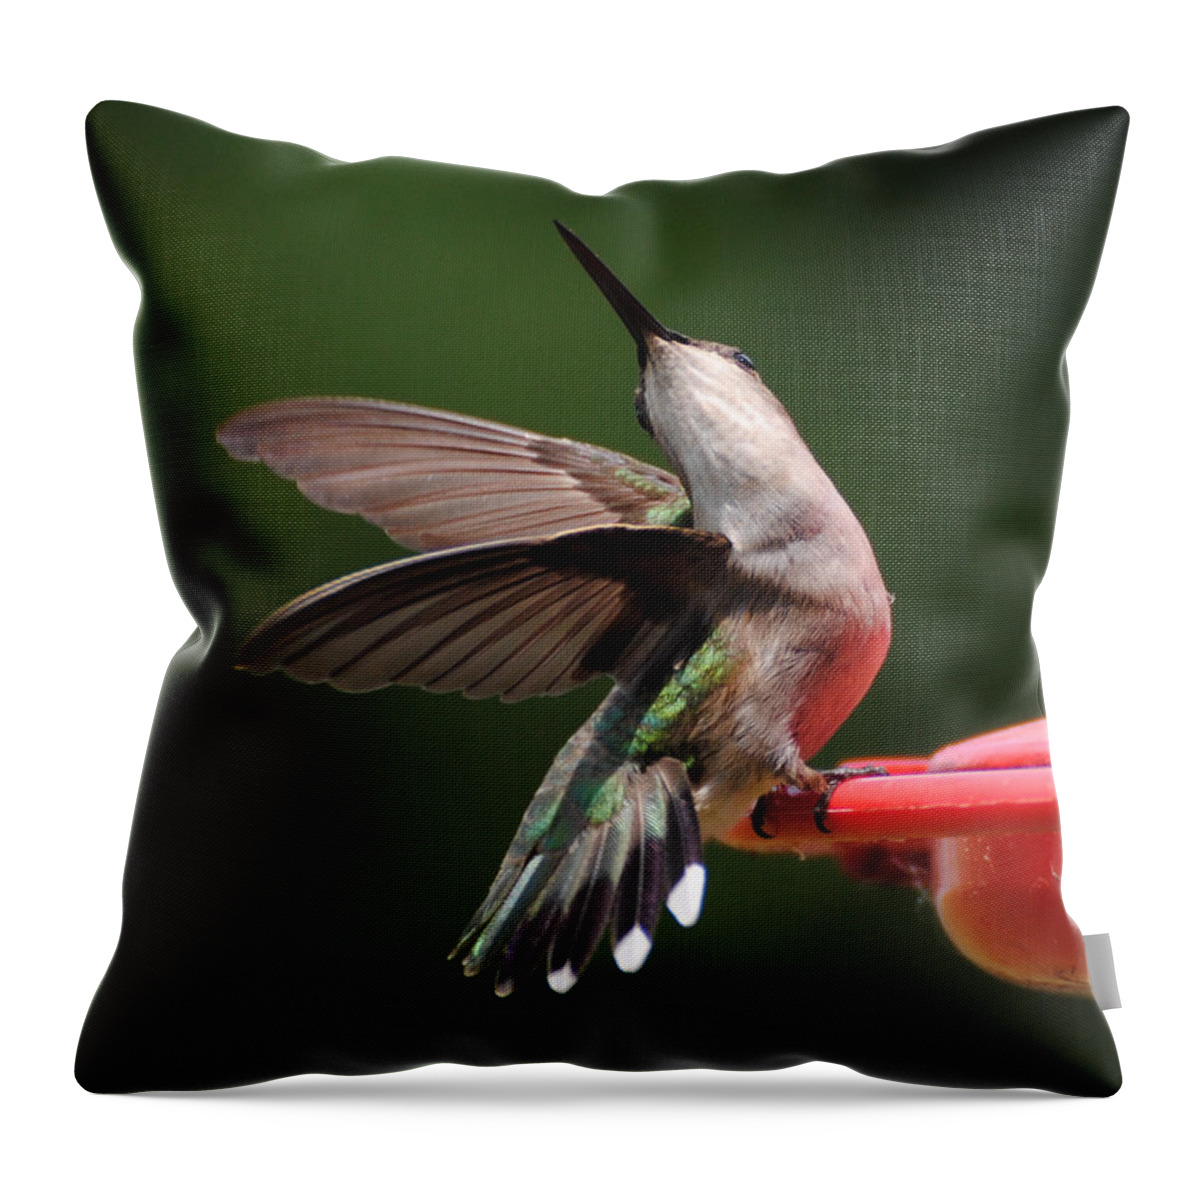 Avian Throw Pillow featuring the photograph Dance of the Hummingbird by Jai Johnson